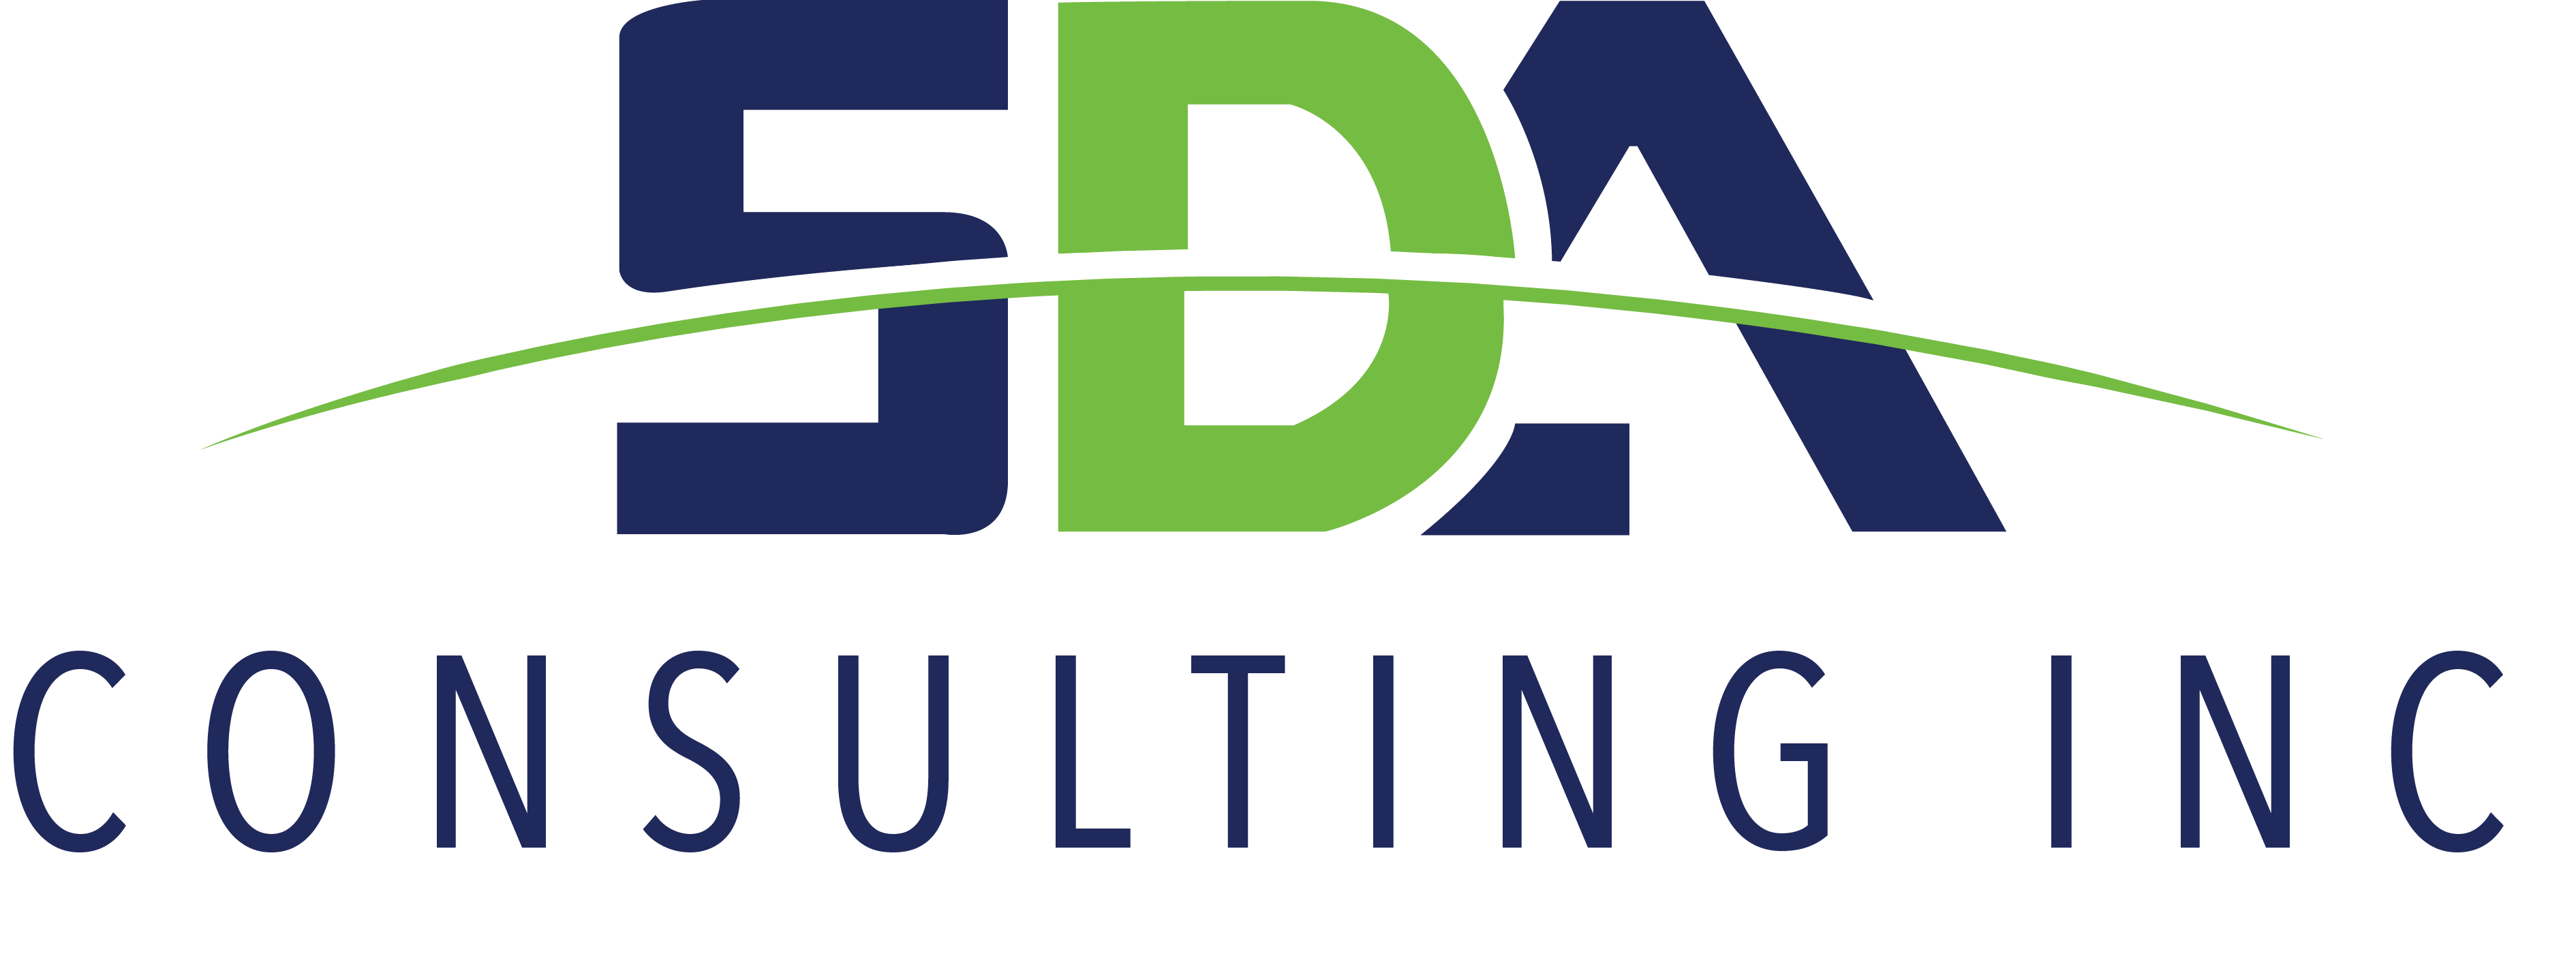 SDA Logo - sda-logo - SDA Consulting Inc.